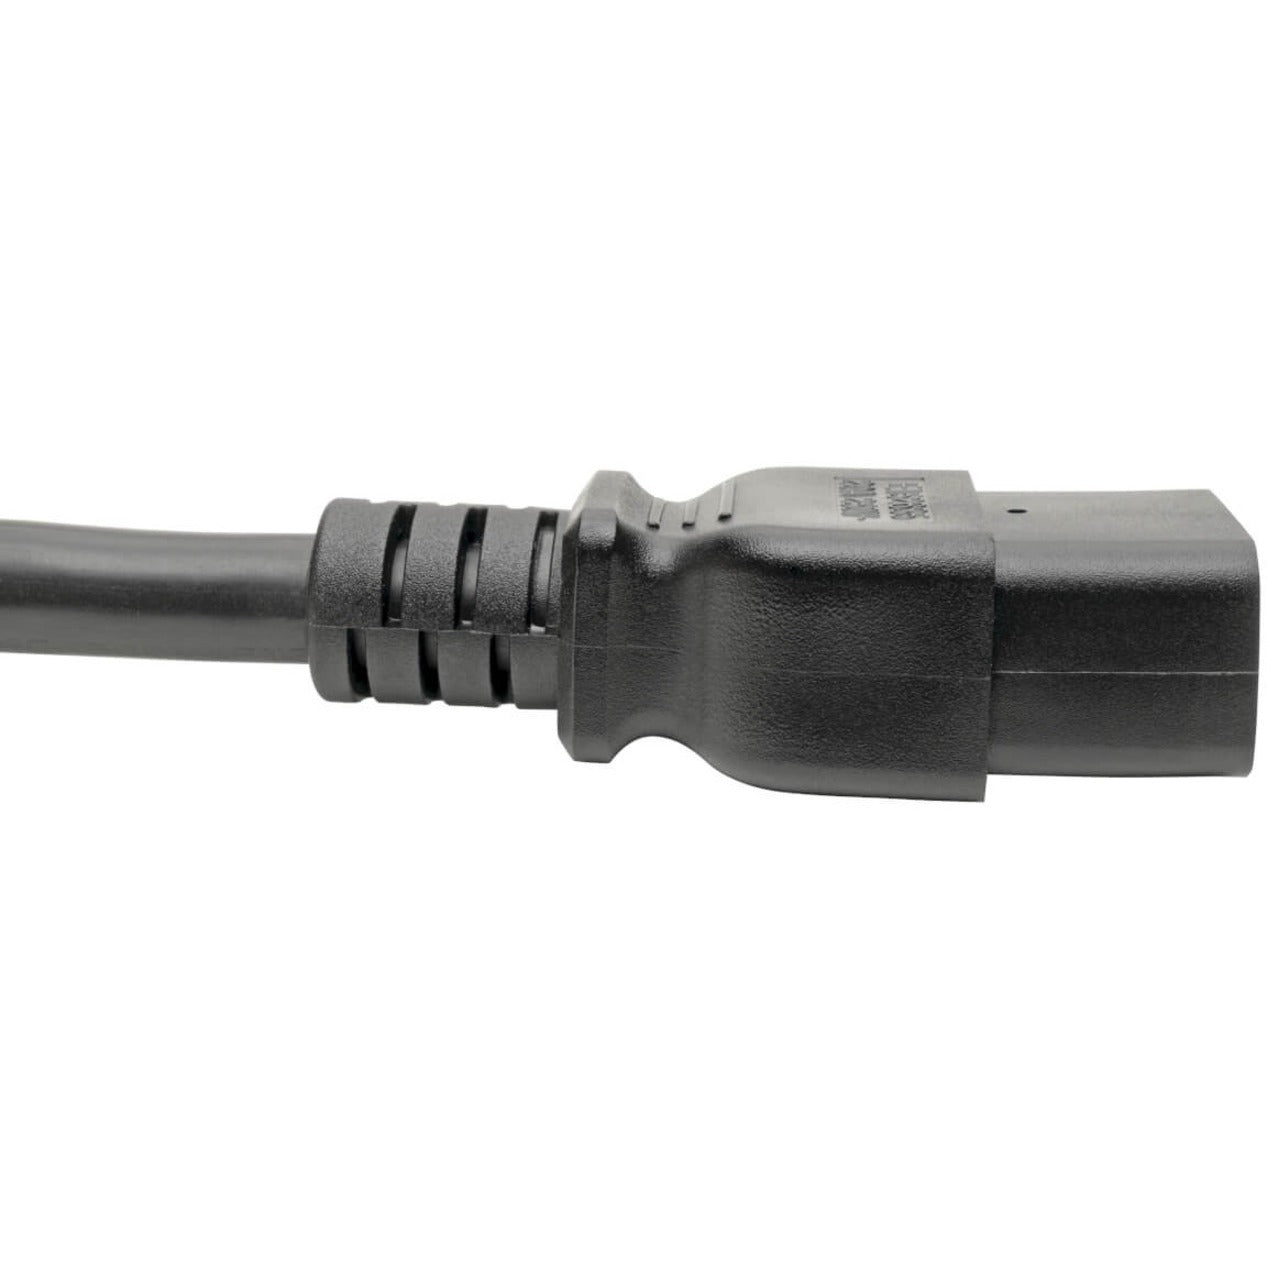 Tripp Lite P036-006-2C19 Power Cord Splitter Cable, 6 ft, 20A, 110V/220V AC